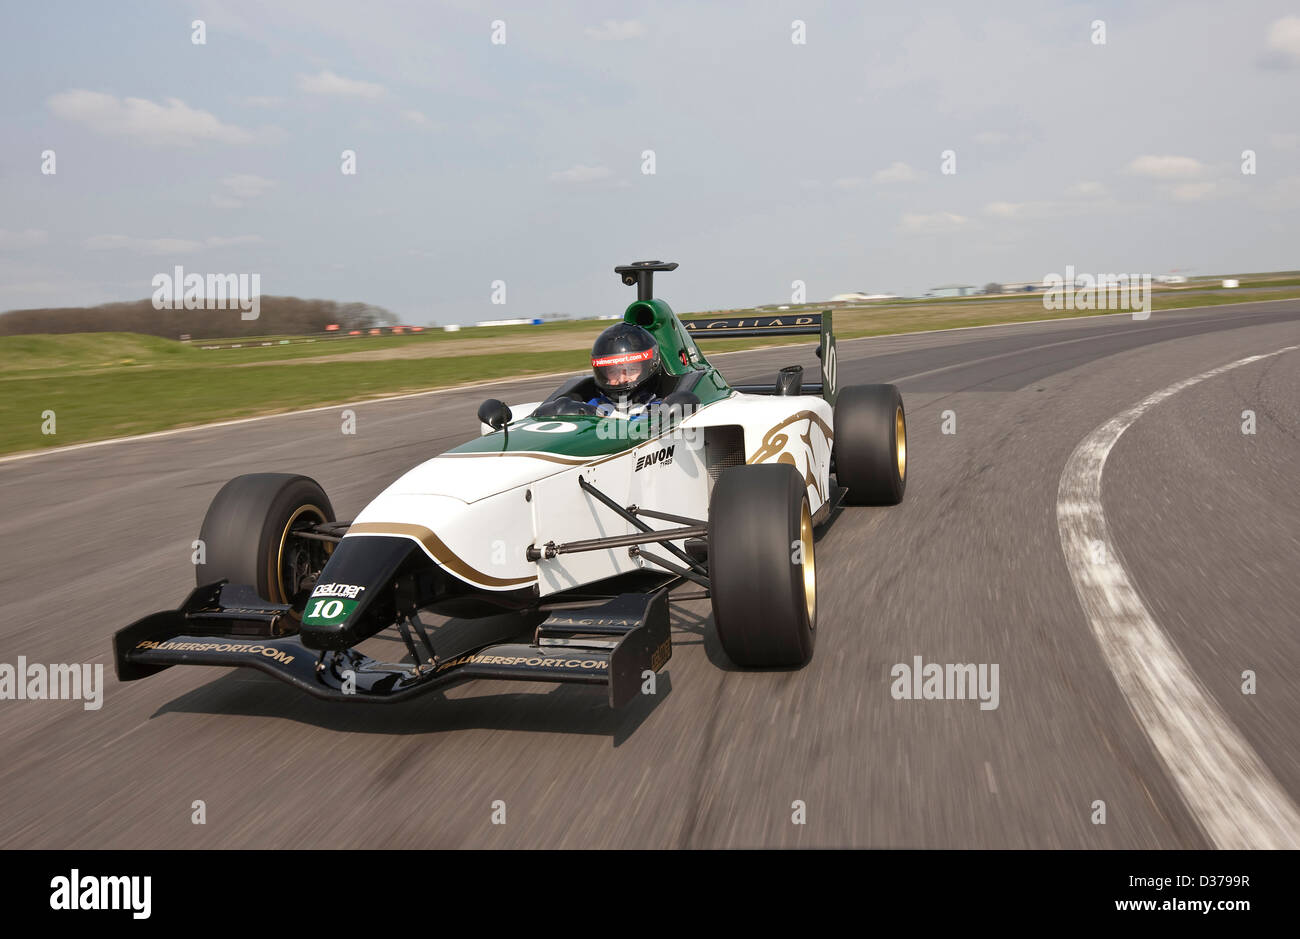 James Martin fahren Formel 1 Jaguar Rennwagen, Bedford Autorennbahn, UK 12 04 10 Stockfoto